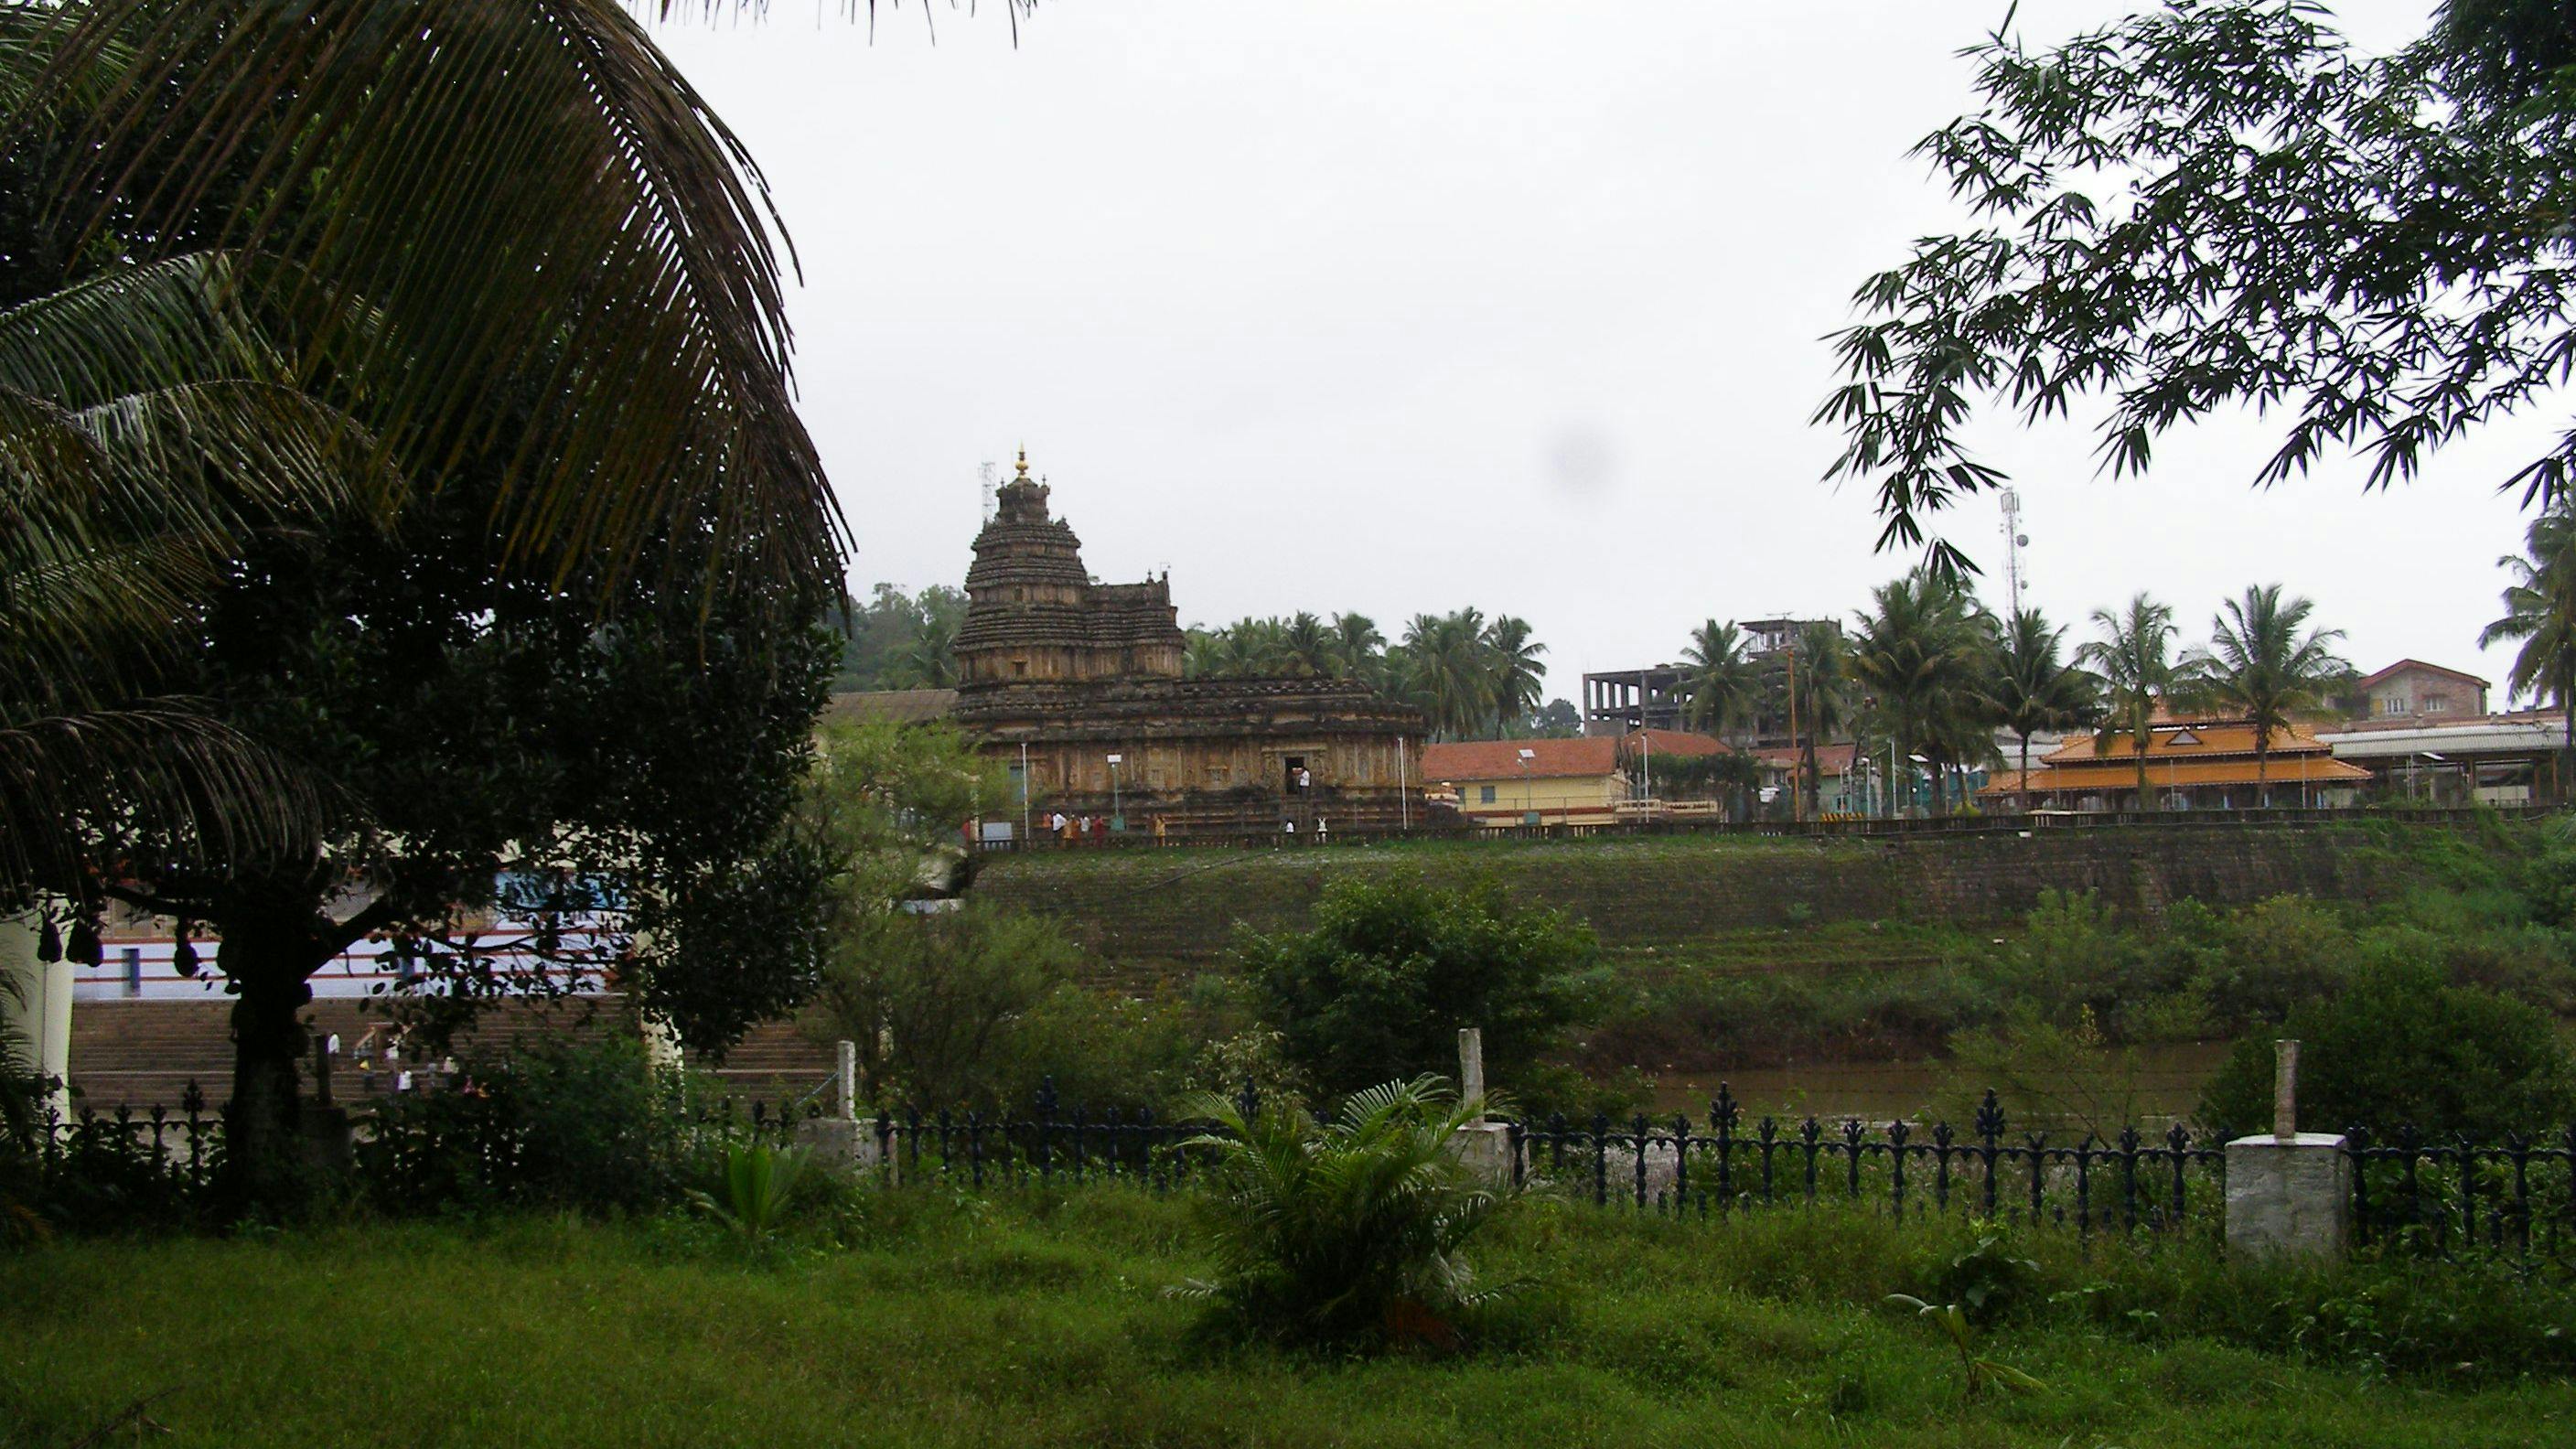 Sringeri temple viewed from across the Tunga river